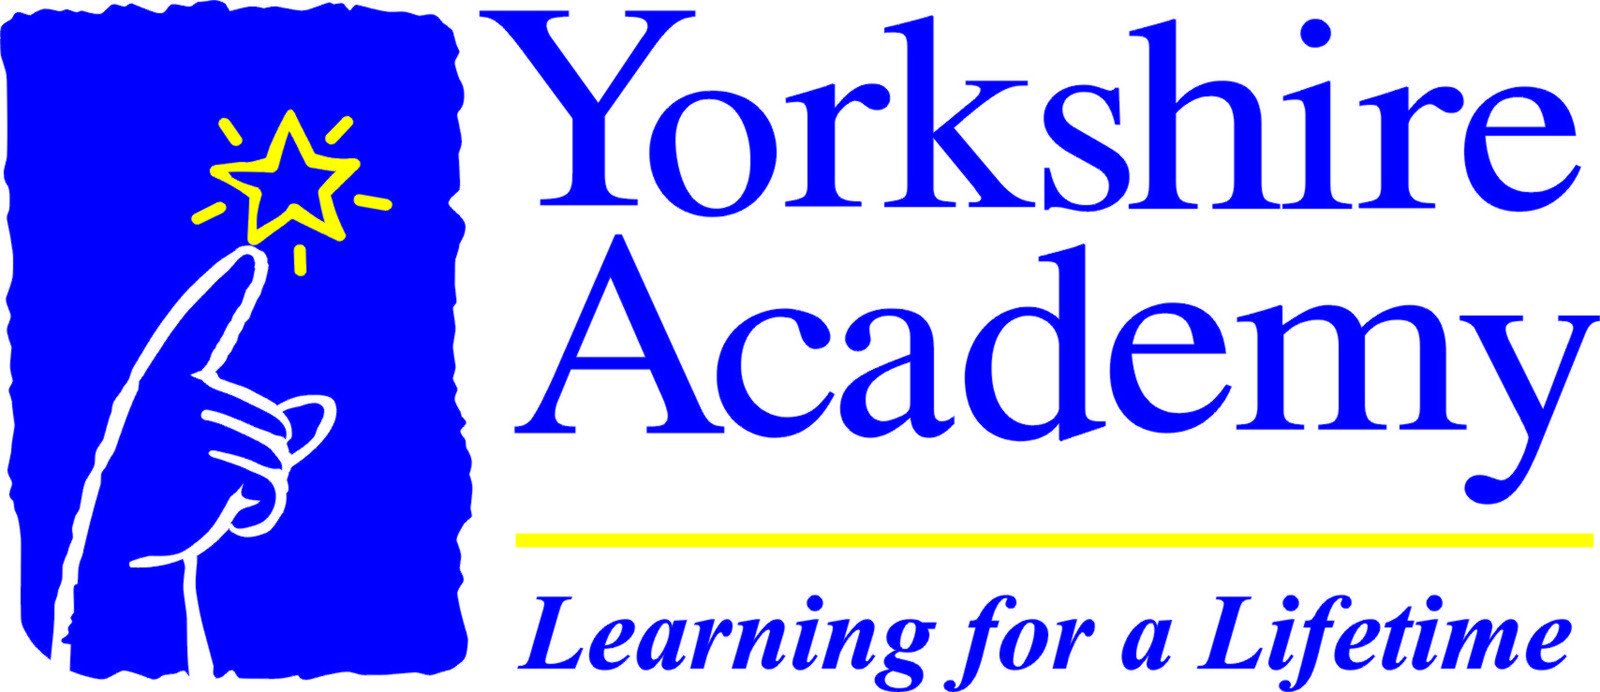 Yorkshire Academy 